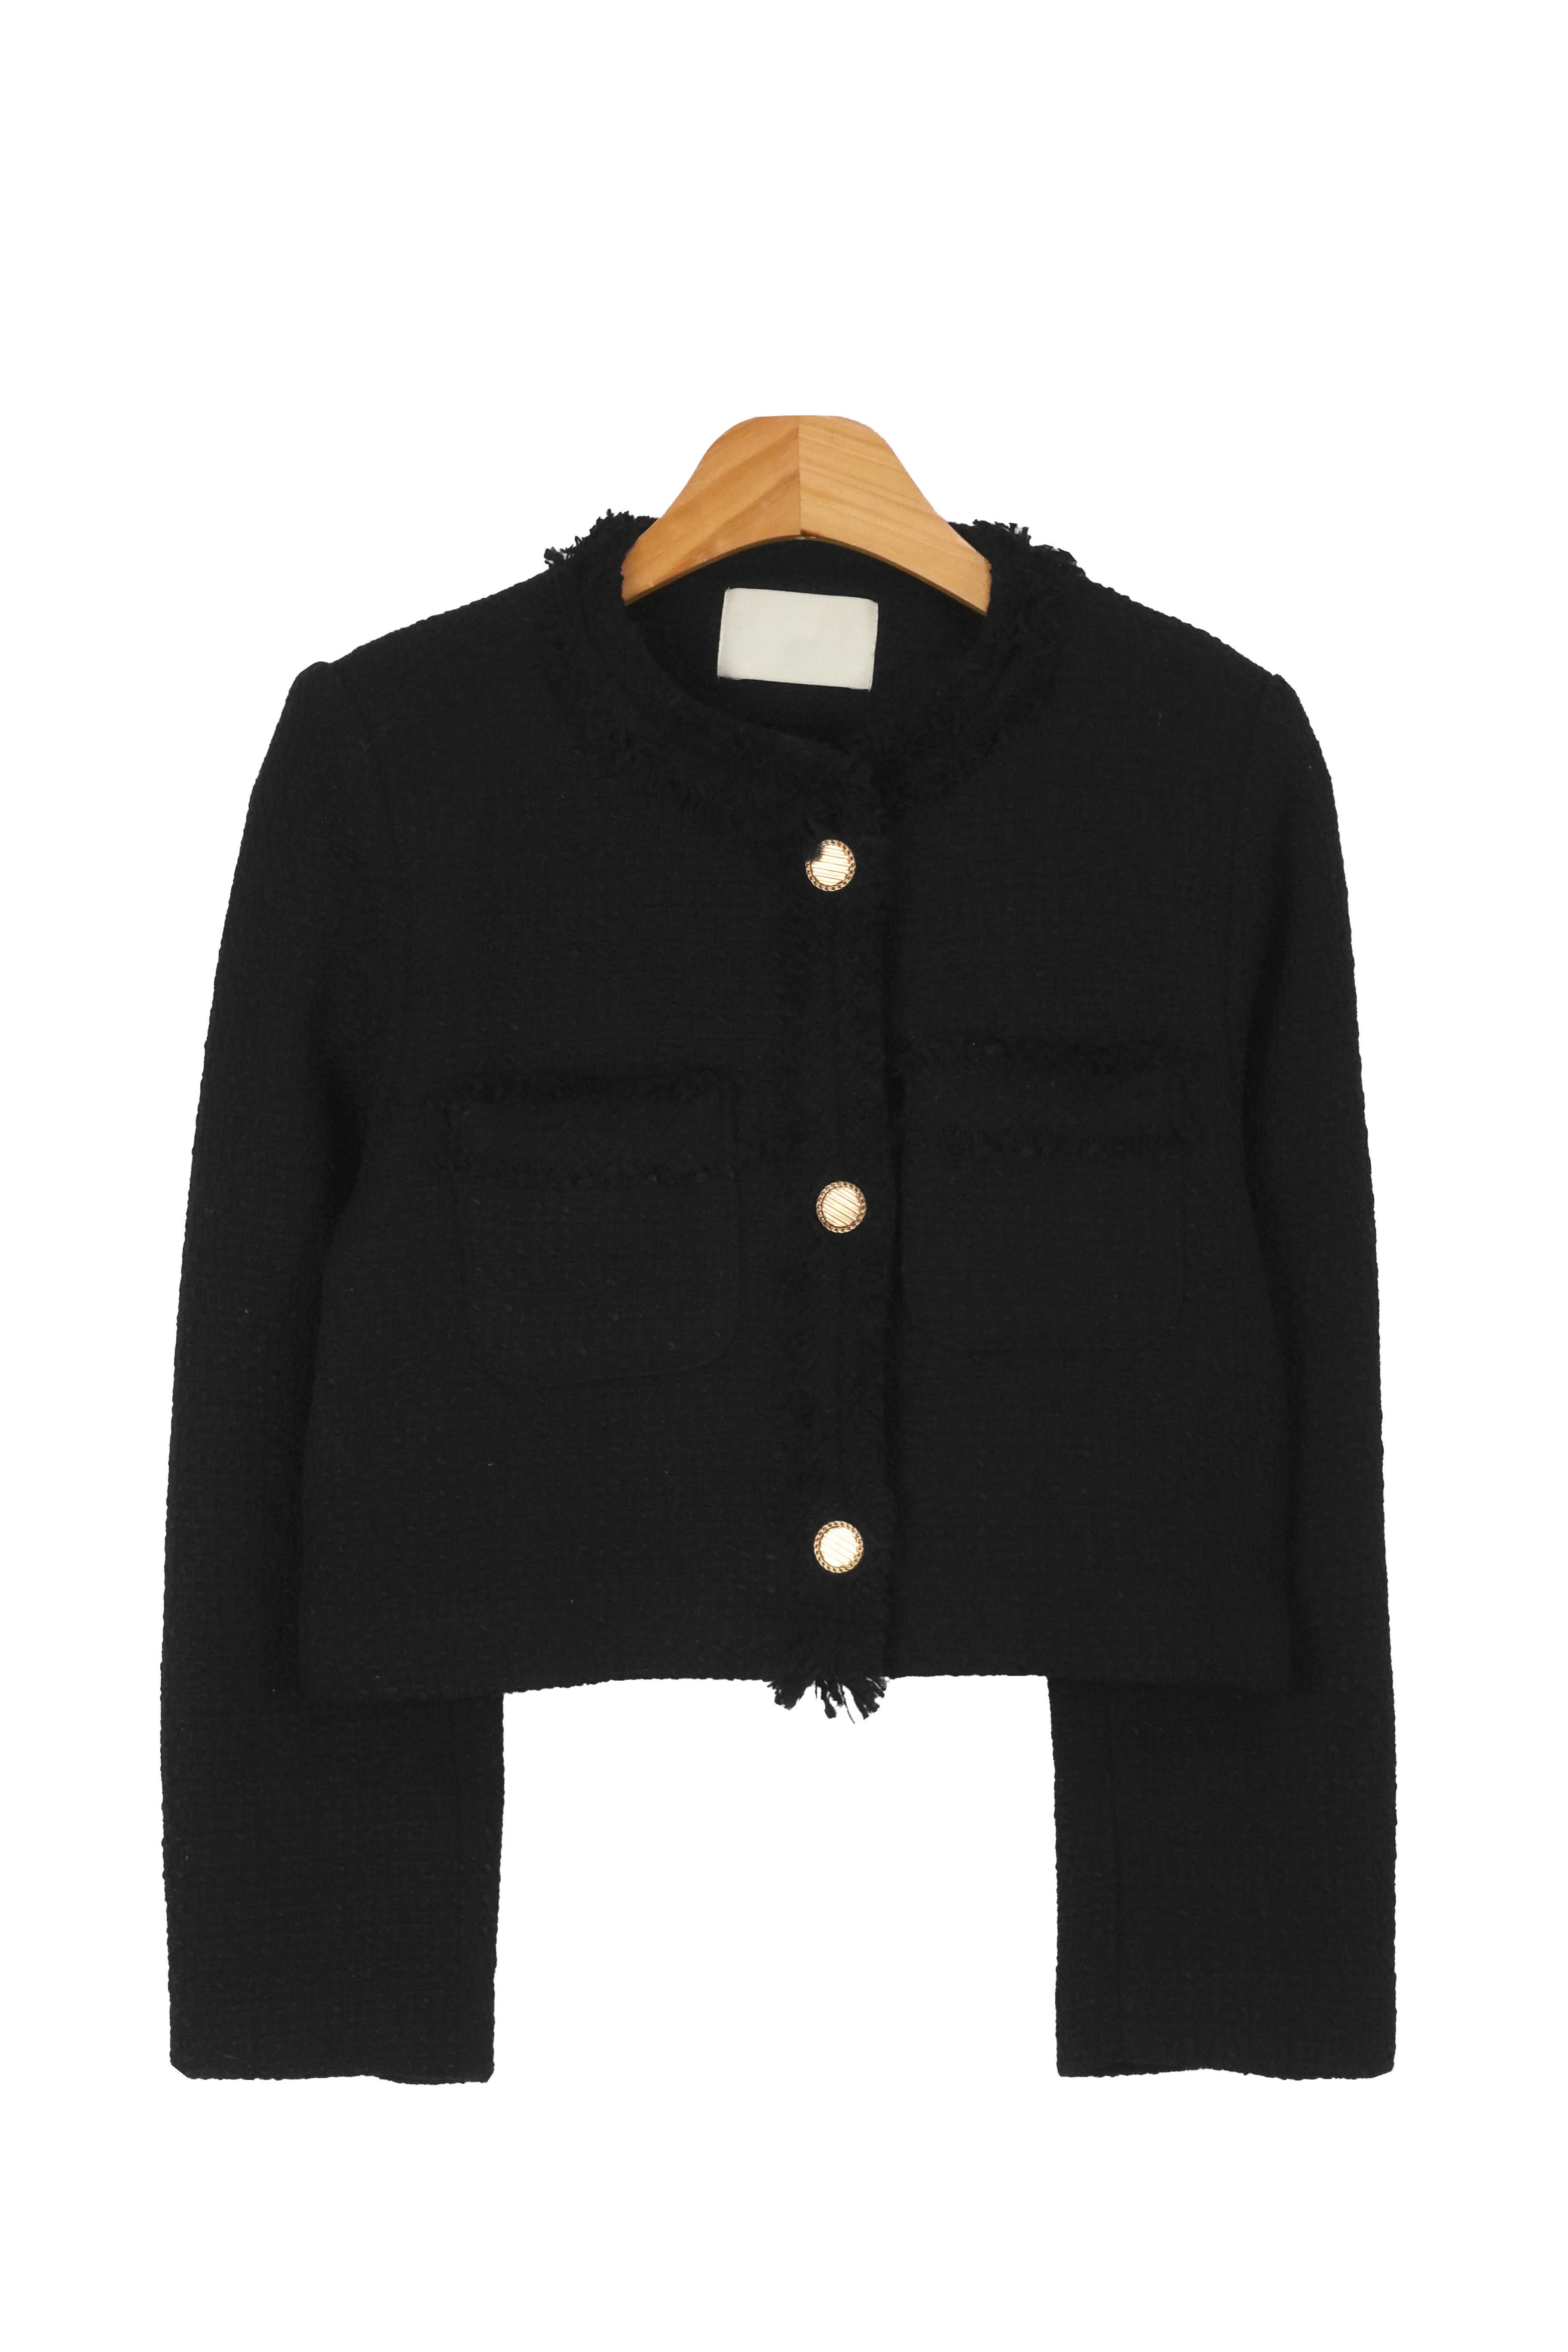 Dear Spring No Collar Tweed Guest Look Cropped Short Jacket (2 Colors)